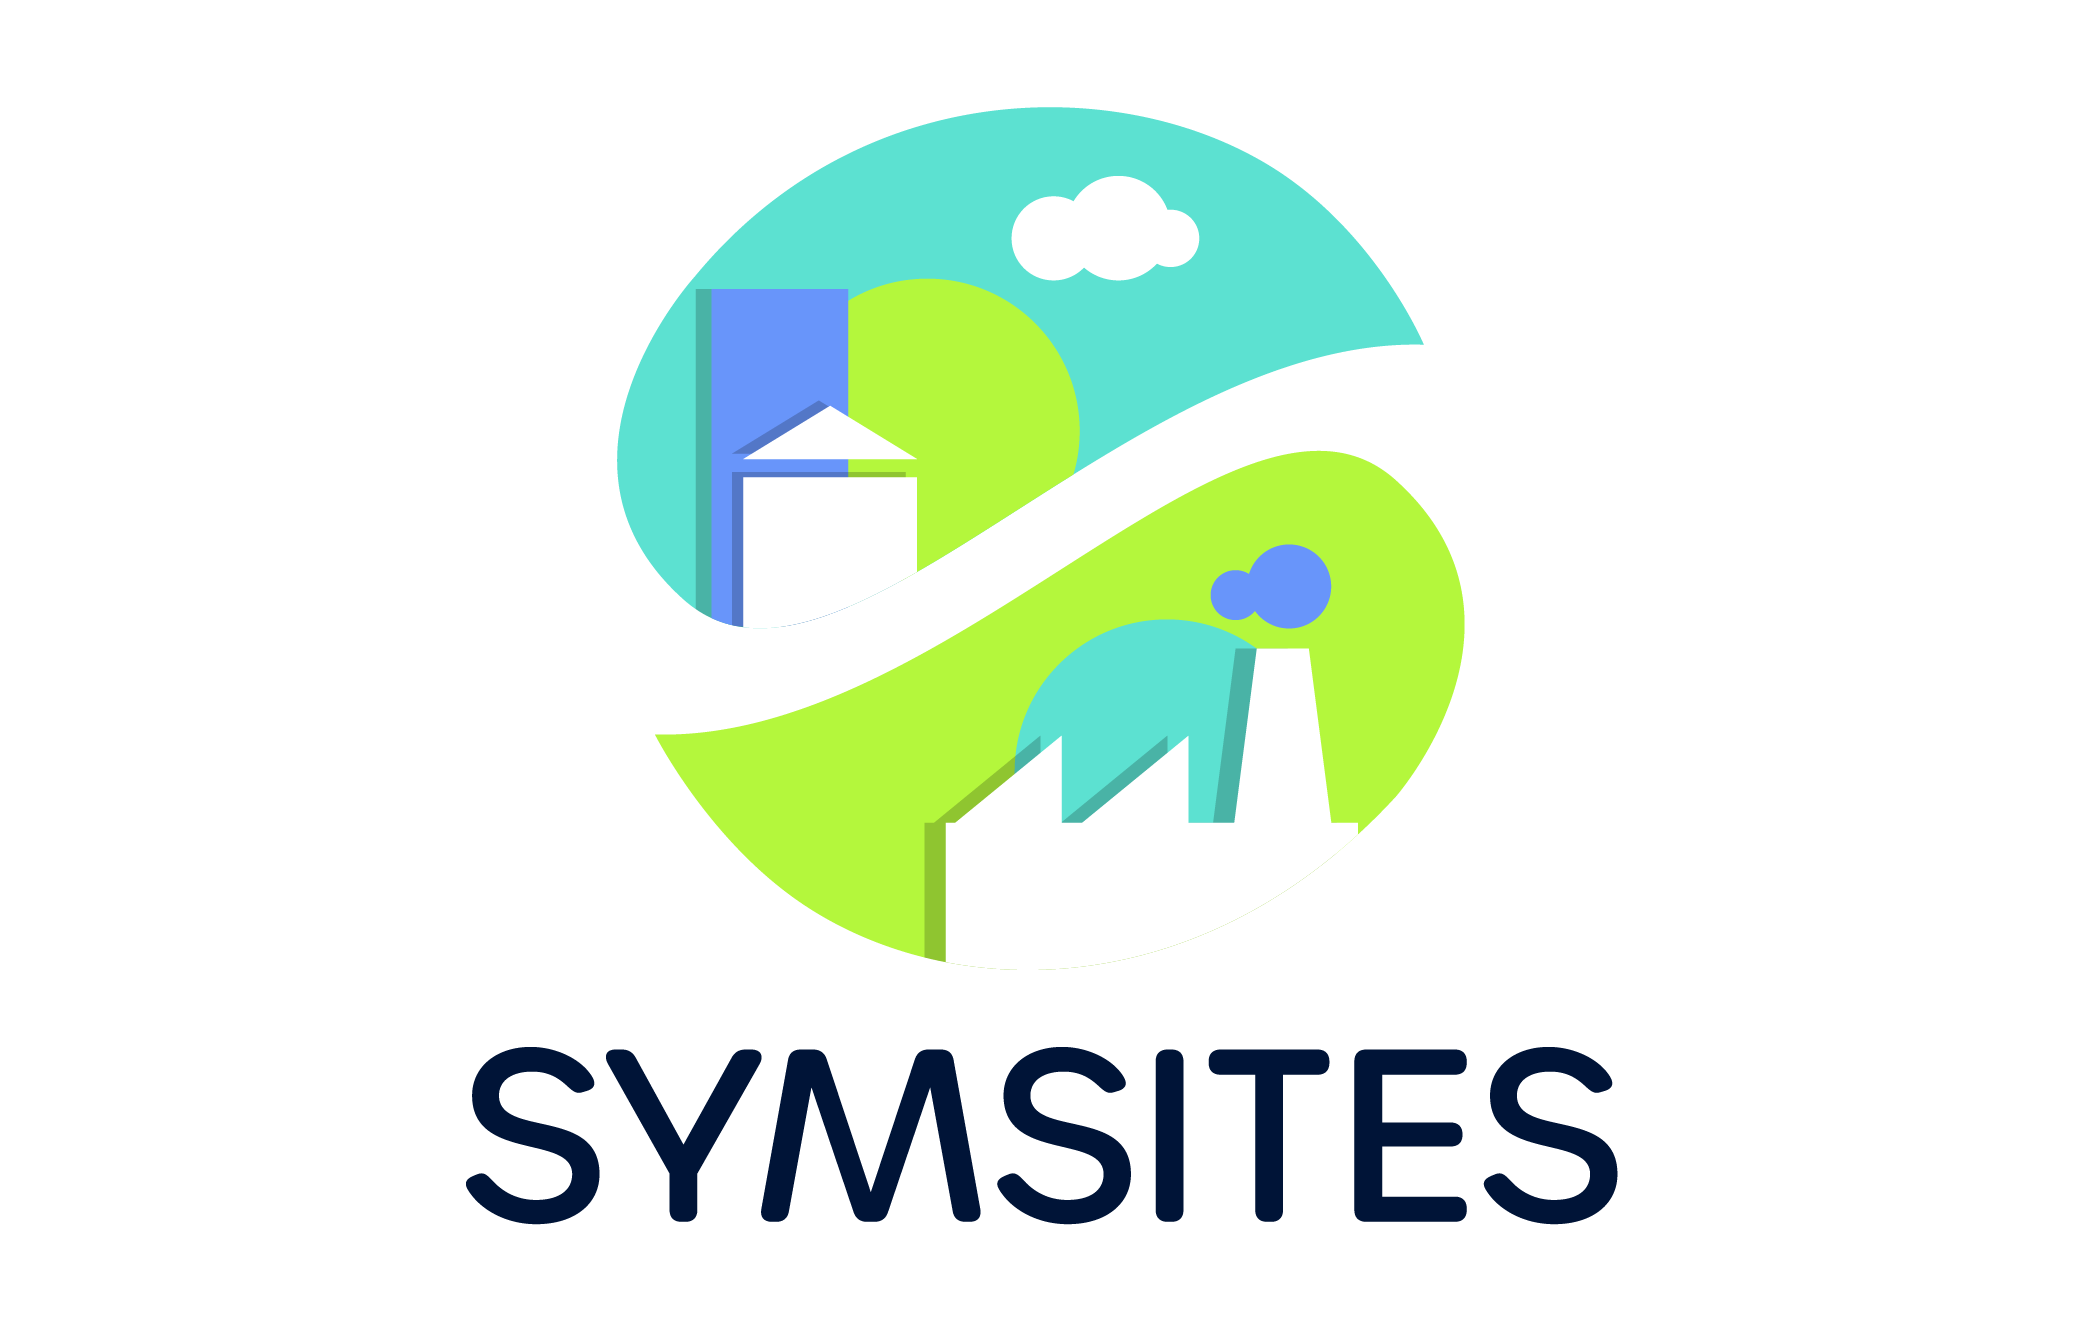 symsites logo rgb colors